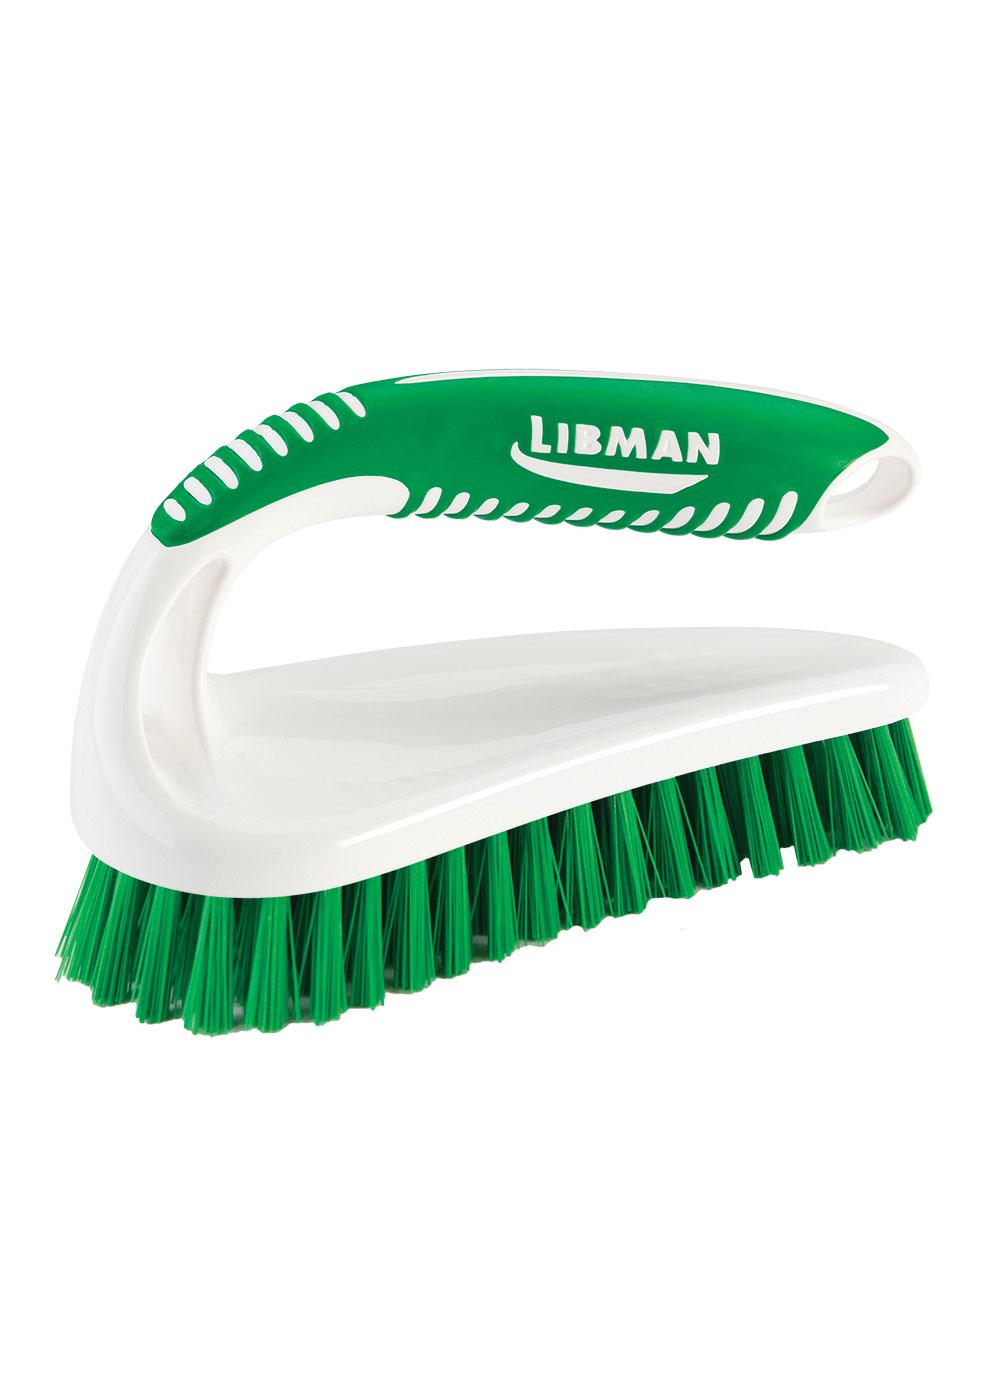 Libman Small Space Scrub Brush